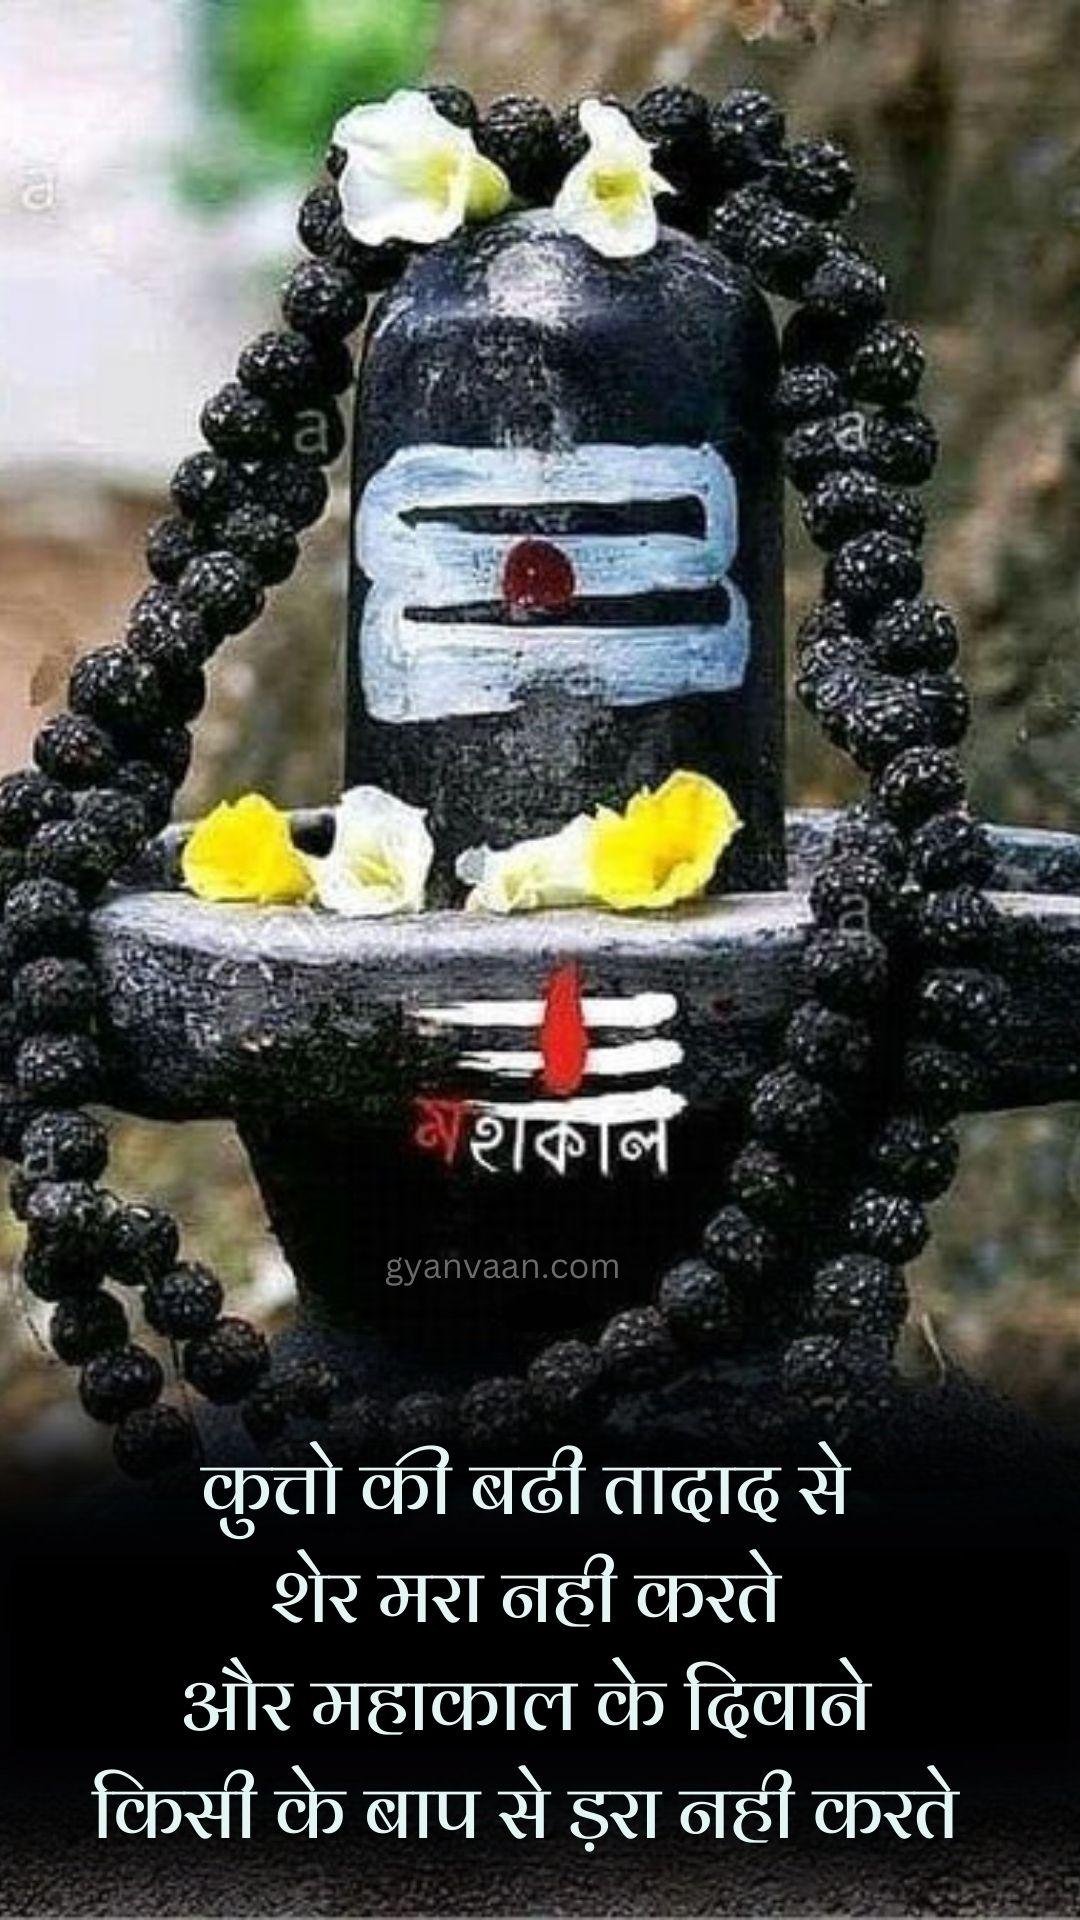 Lord Shiva Mahadev Quotes And Mahakal Status In Hindi For Mobile 38 - Shiva Quotes